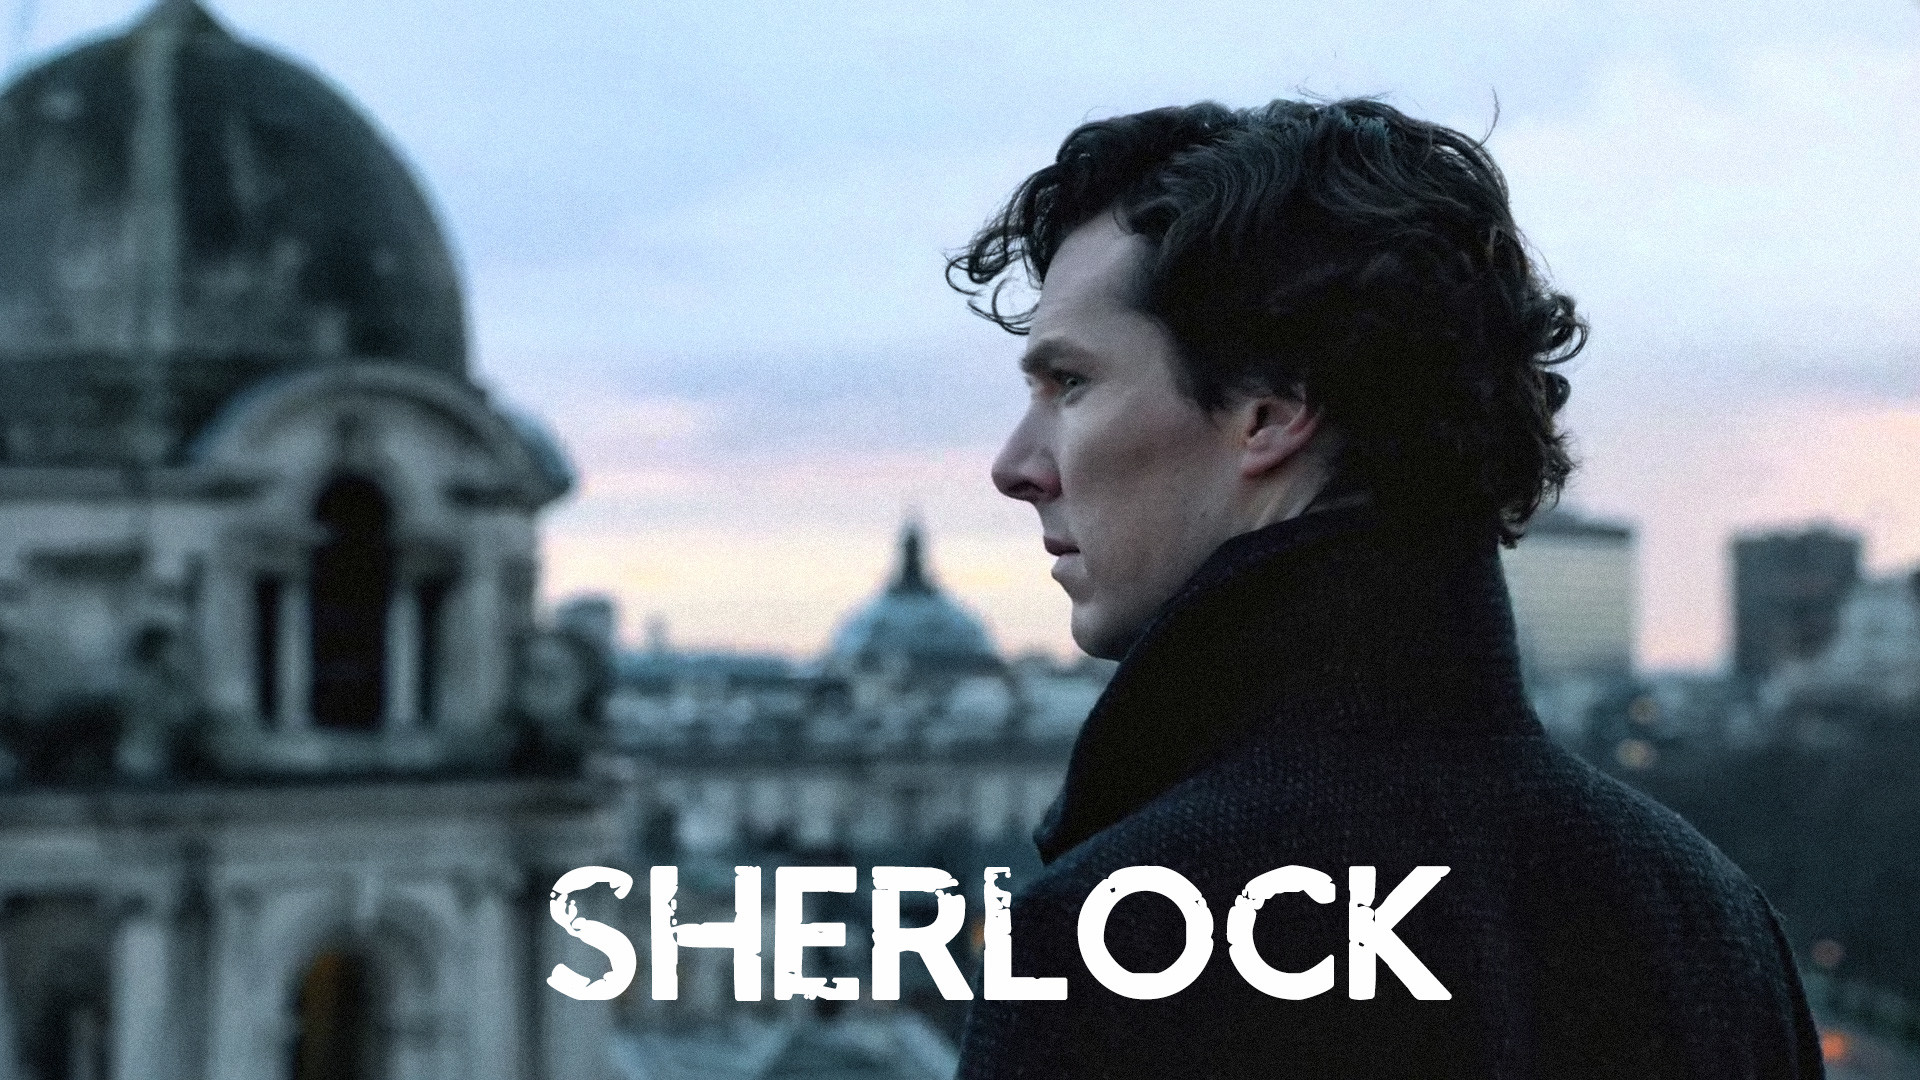 Benedict Cumberbatch Sherlock Wallpaper 82 images